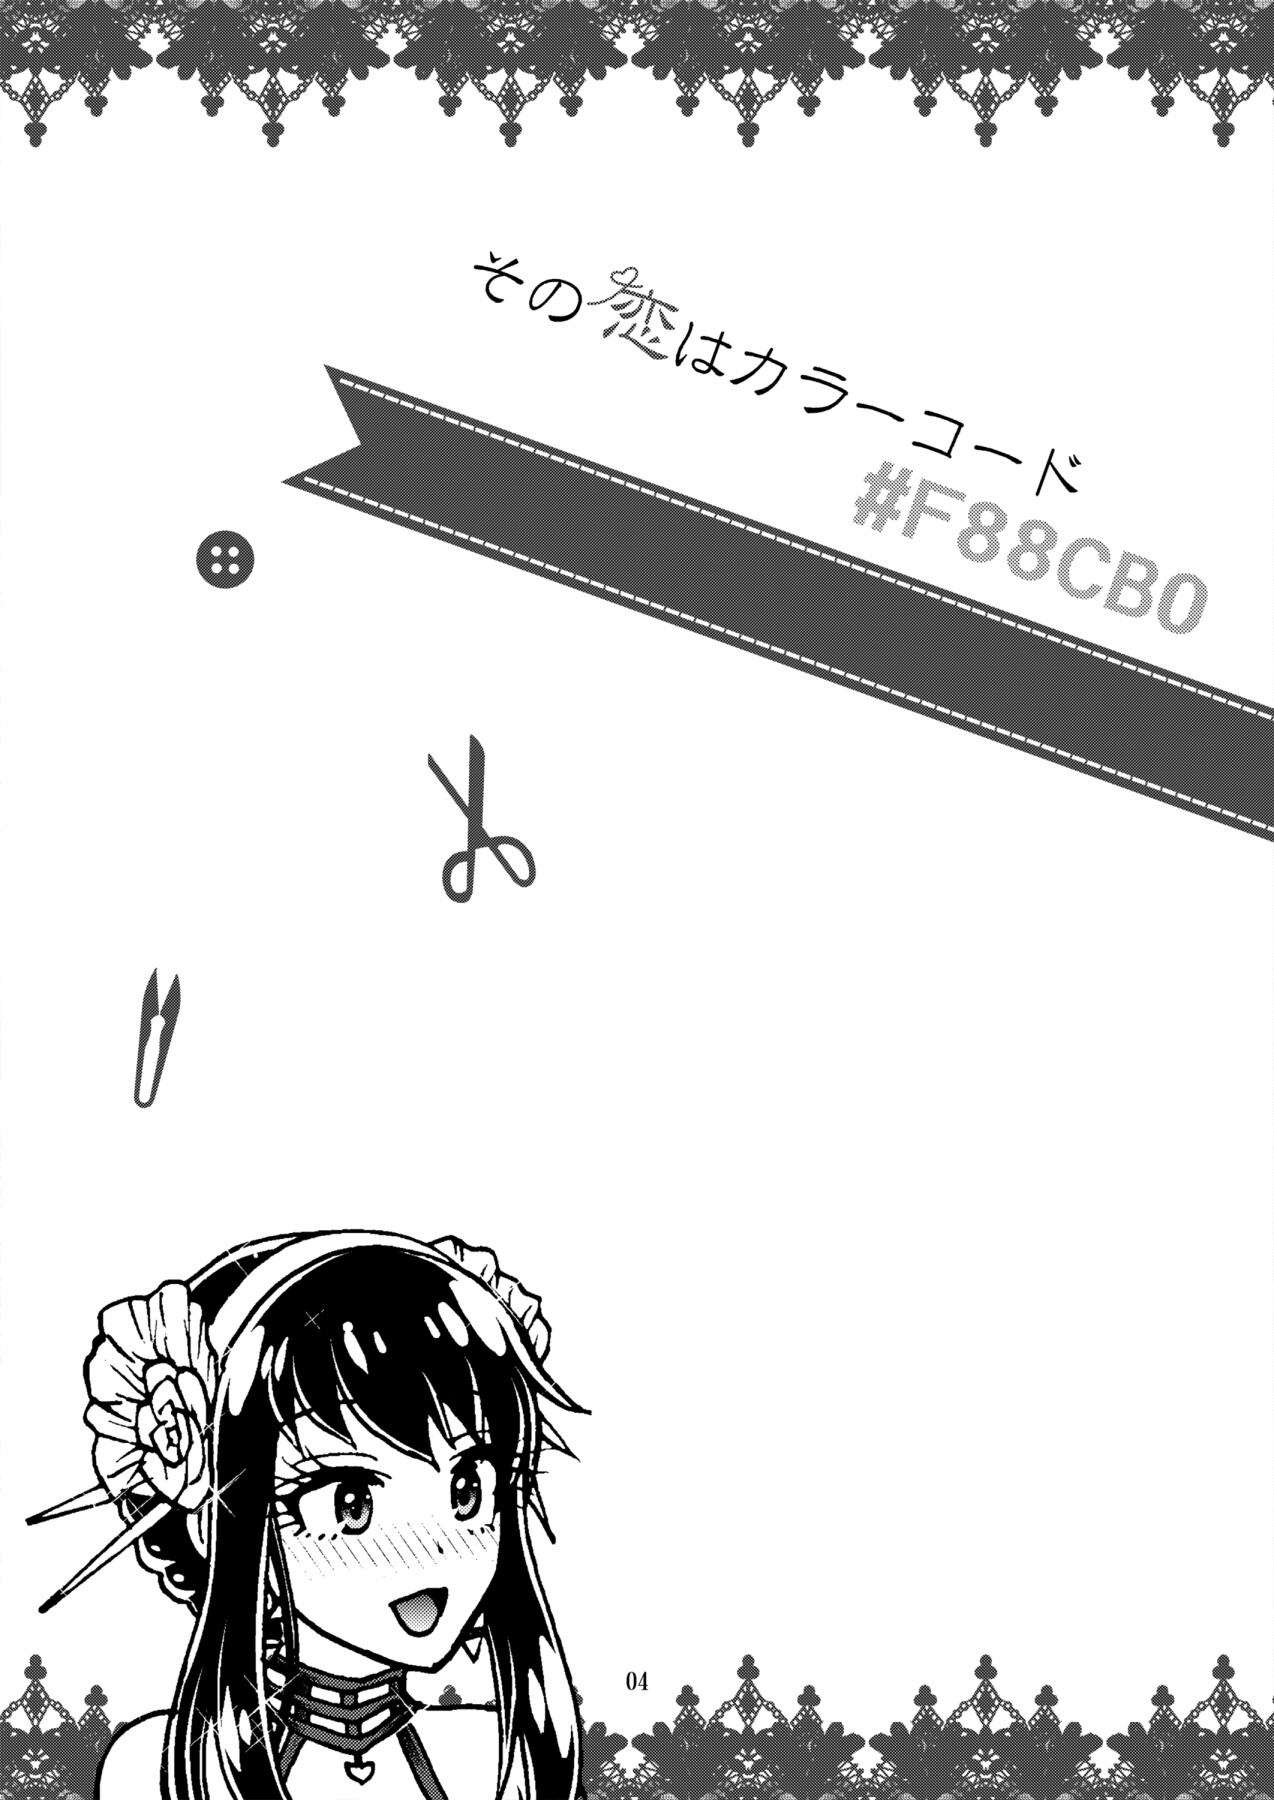 Hentai Manga Comic-That Love is Color Code #F88CB0-Read-2